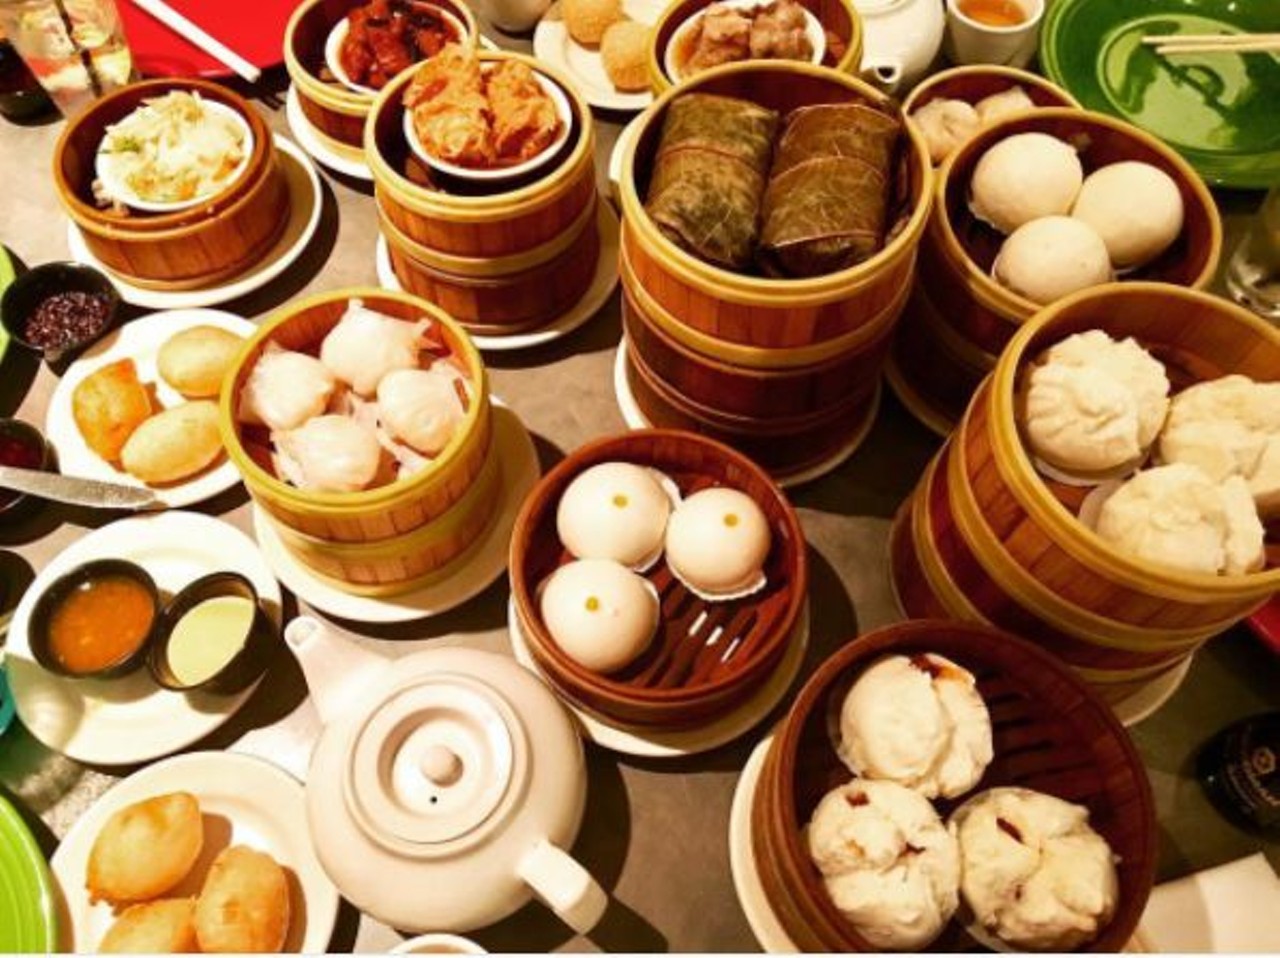 Best Chinese Restaurant
Golden Wok, multiple locations, goldenwoksa.com
Photo via Instagram, jennifer__wan